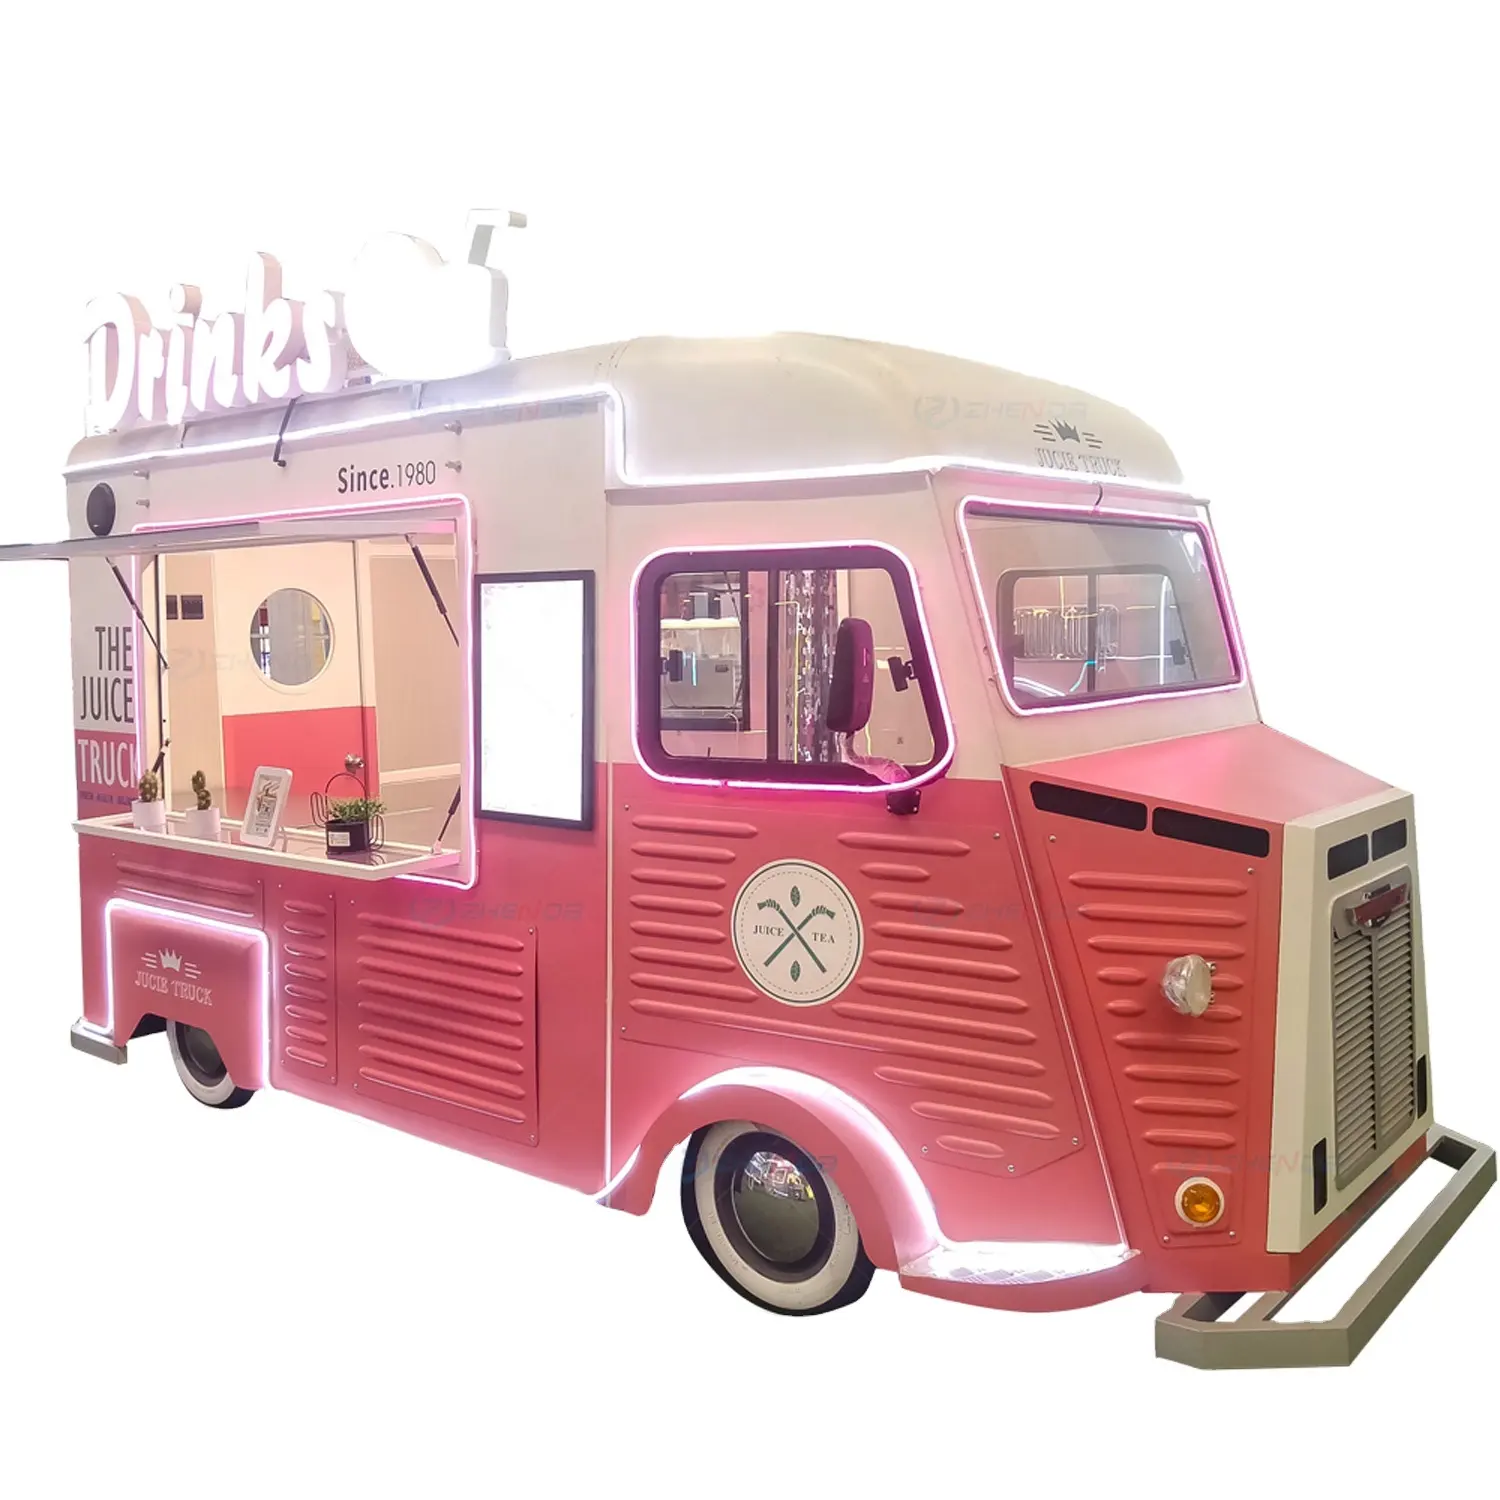 Street BBQ Food Truck Mobiler Verkaufs wagen Snack Food Trailer/London Street Mobiler Snack Food Truck mit günstigem Preis